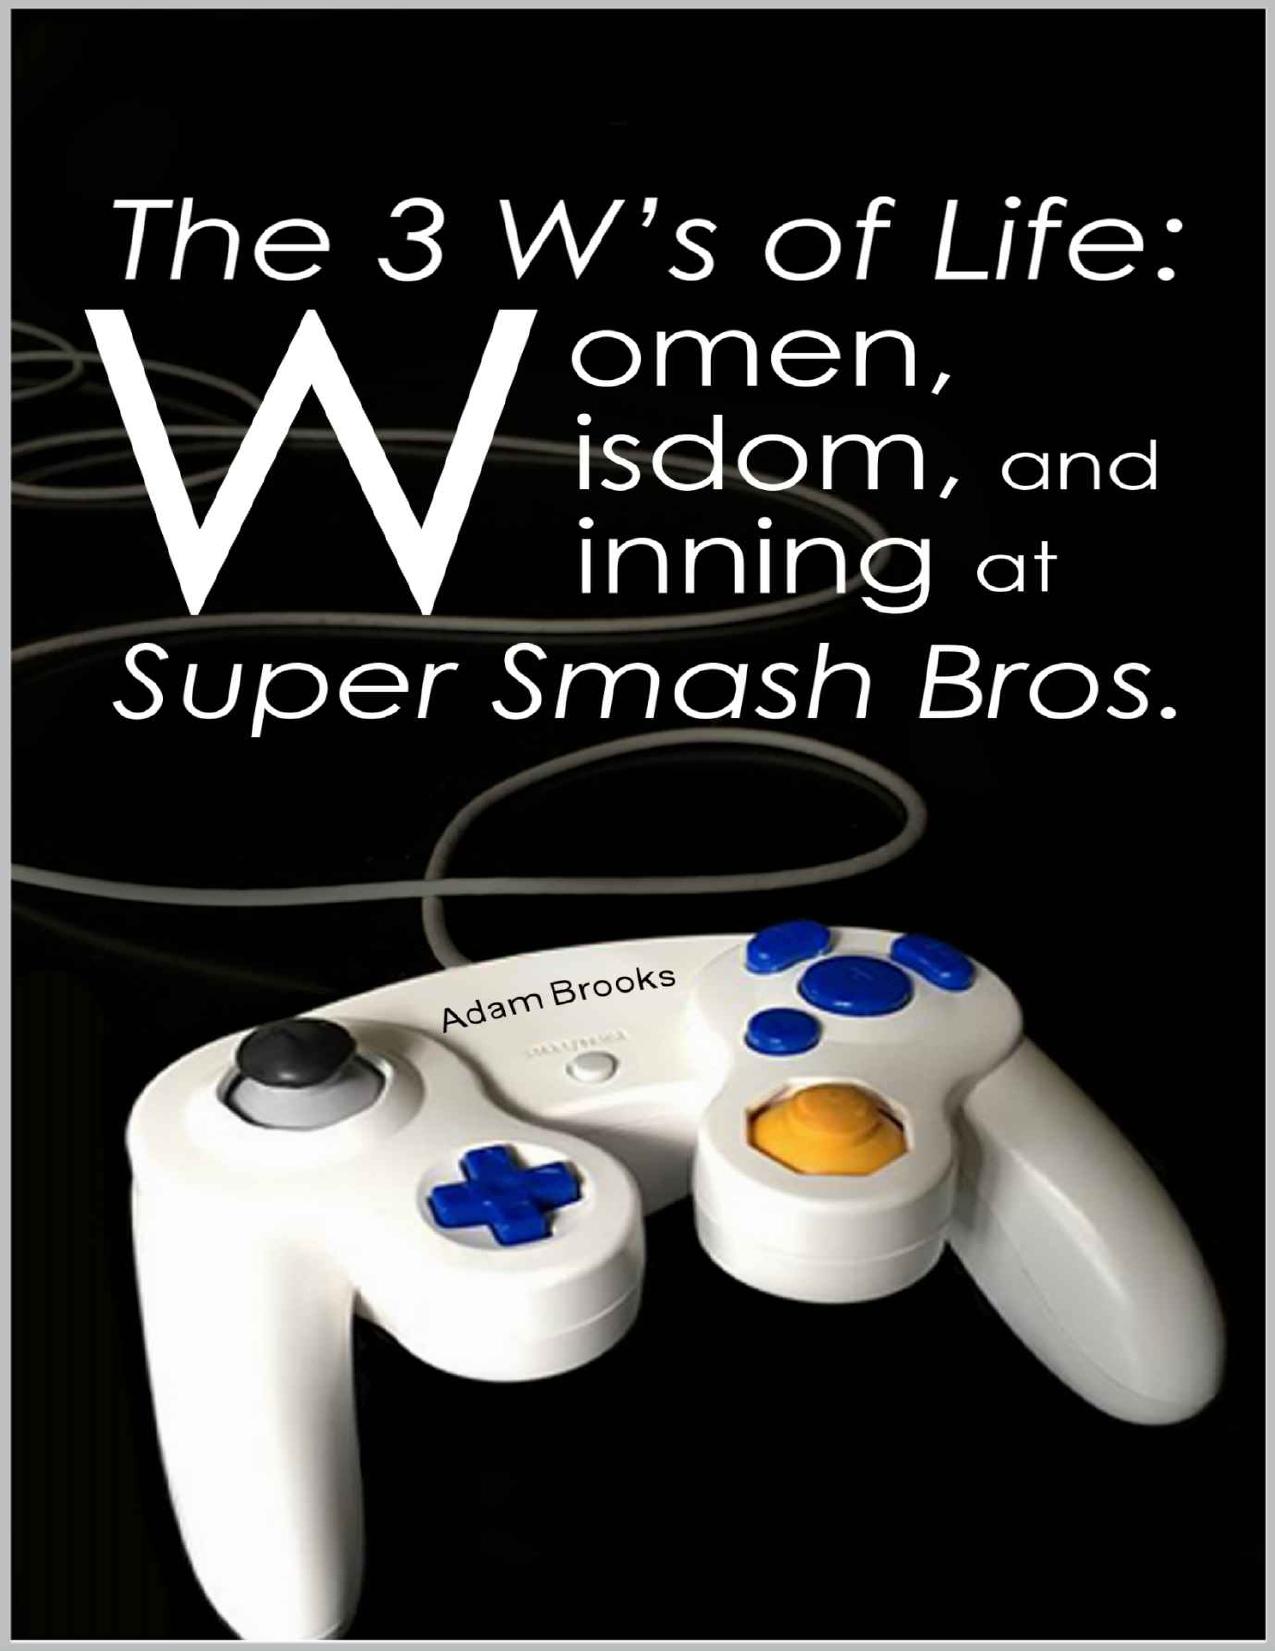 The 3 Wâs of Life: Women, Wisdom, and Winning at Super Smash Bros. by Adam Brooks